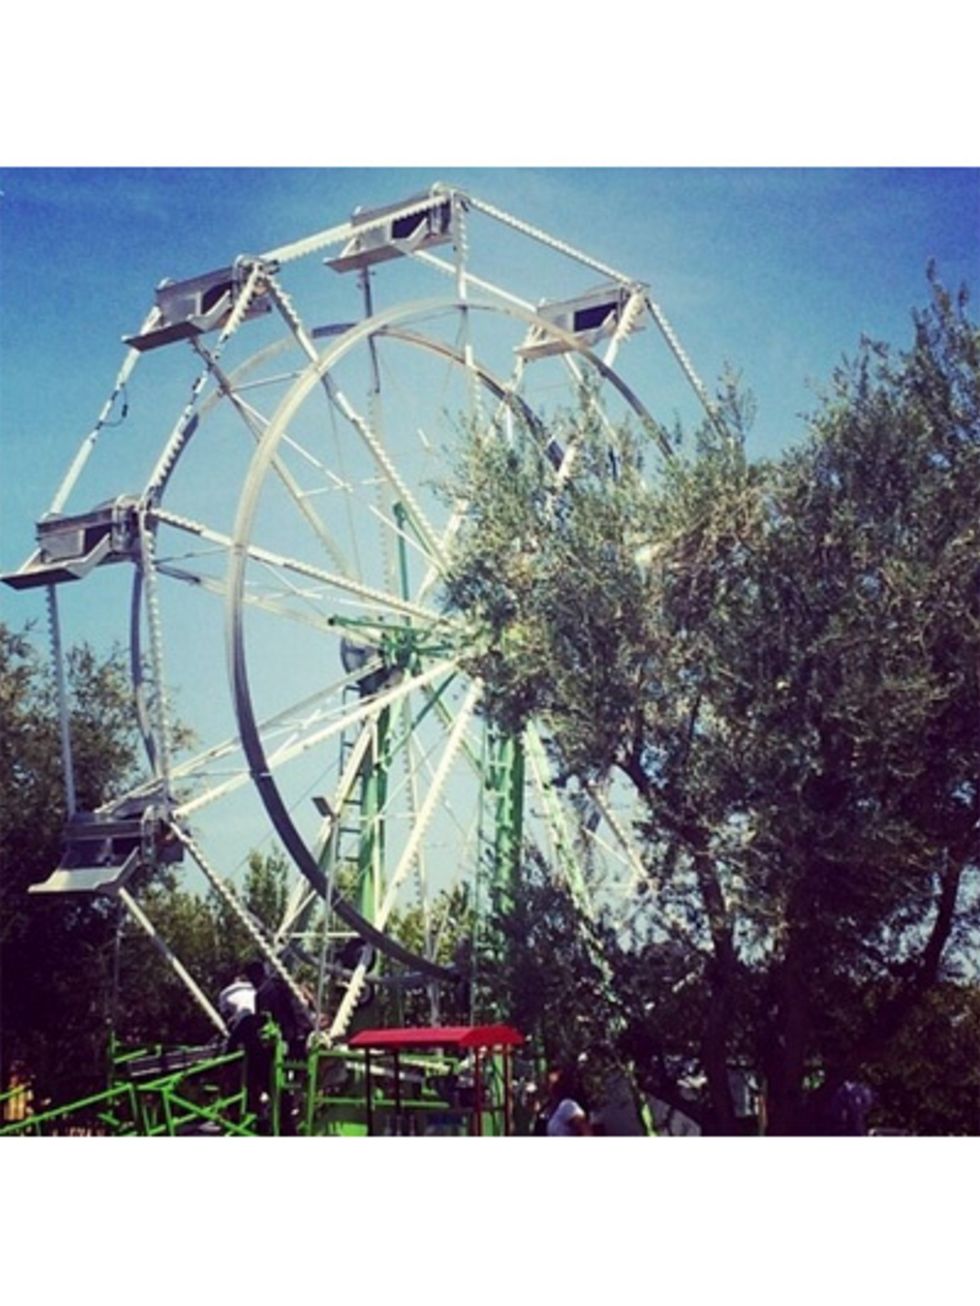 Nature, Ferris wheel, Photograph, Public space, Amusement ride, Summer, Landmark, Amusement park, Sunlight, World, 